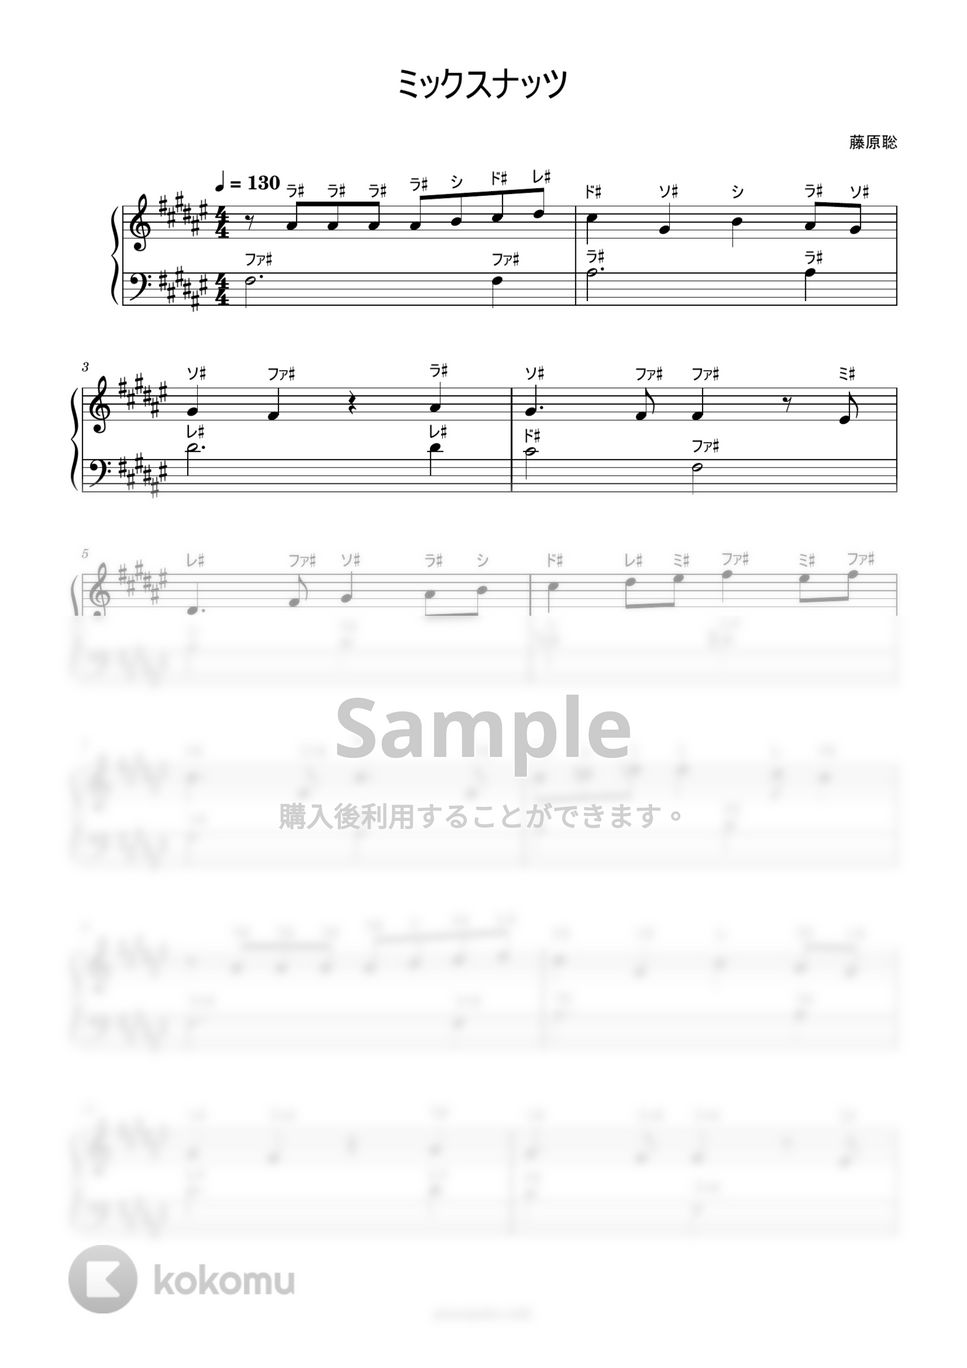 Official髭男dism - ミックスナッツ (ドレミ付き簡単楽譜) by ピアノ塾